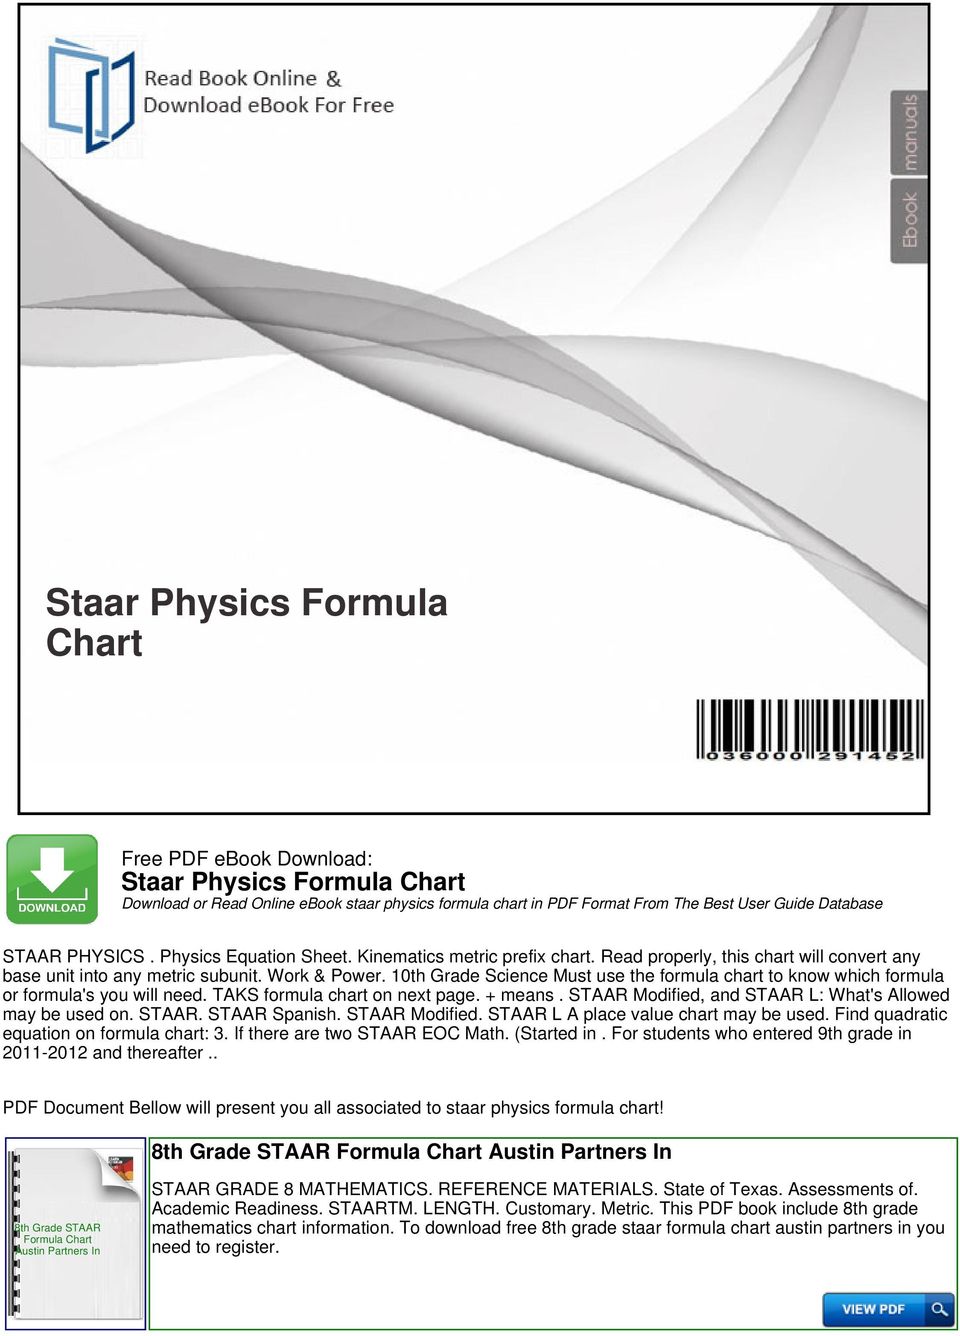 Staar Physics Formula Chart - PDF Free Download